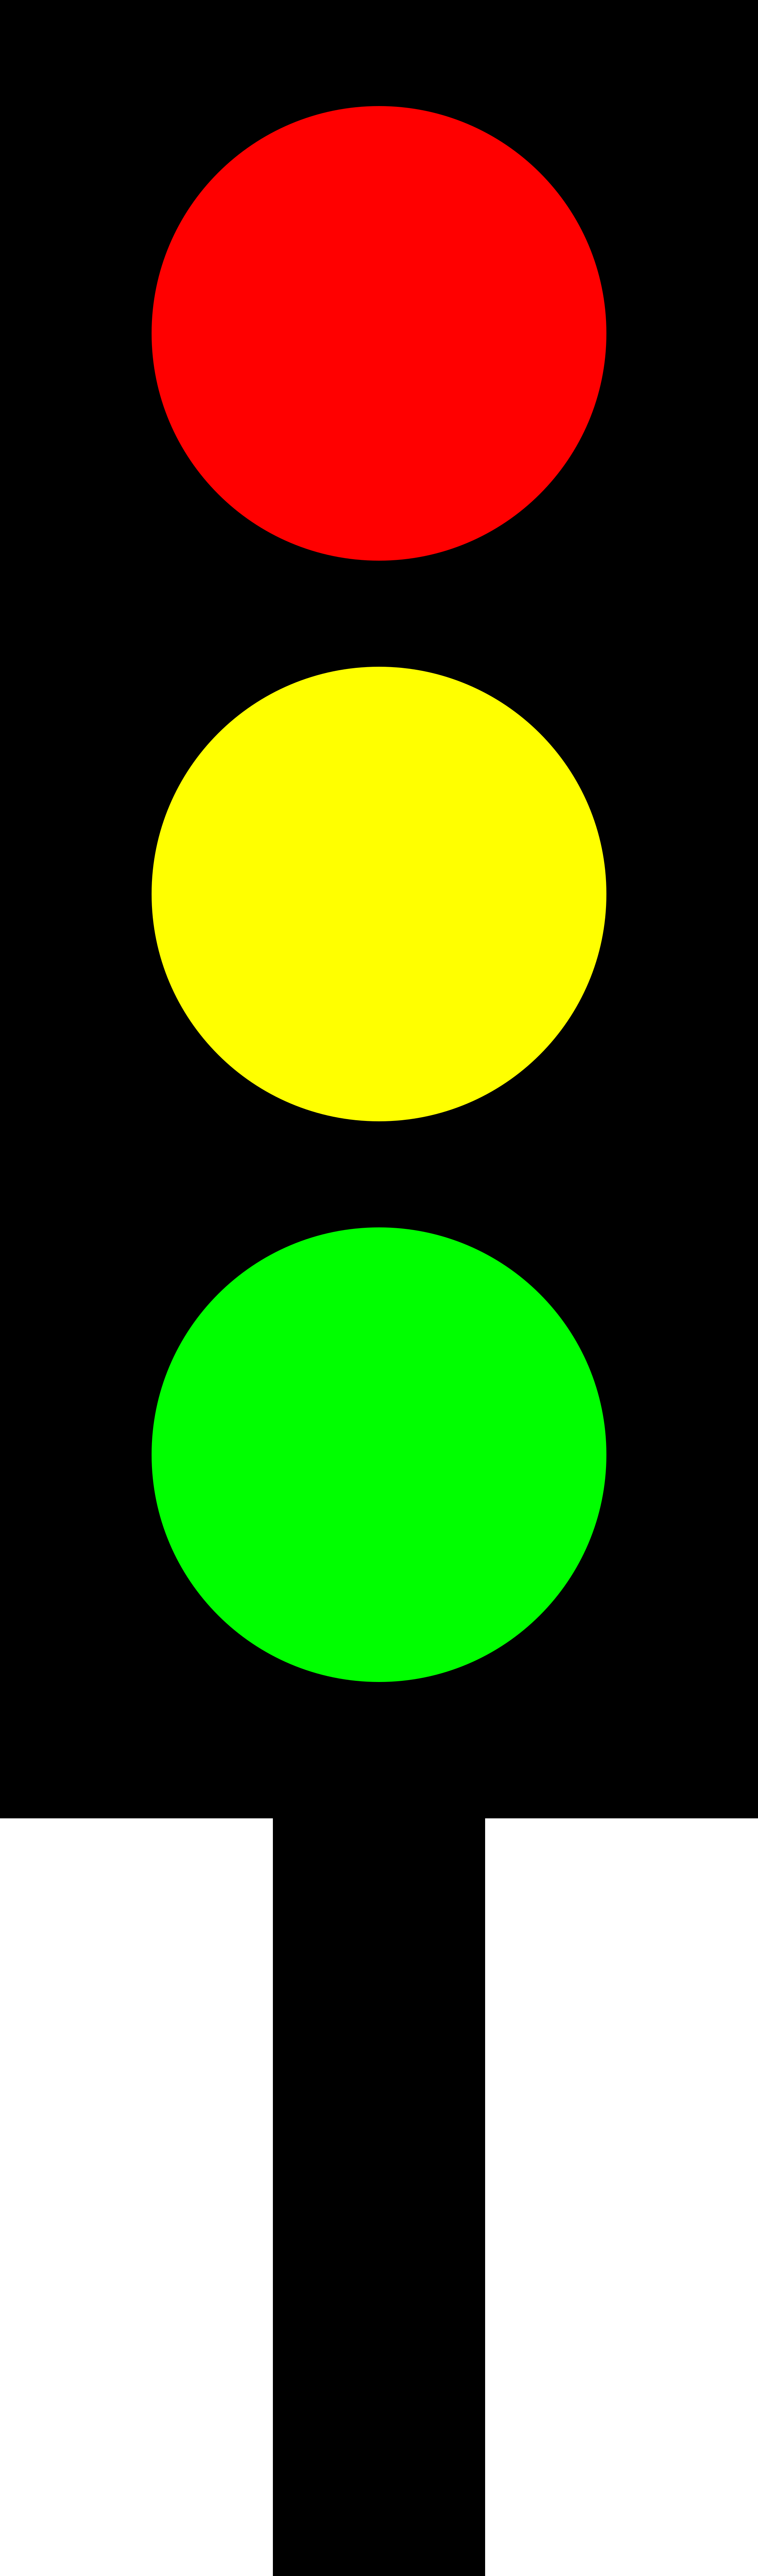 File:Traffic lights icon.svg